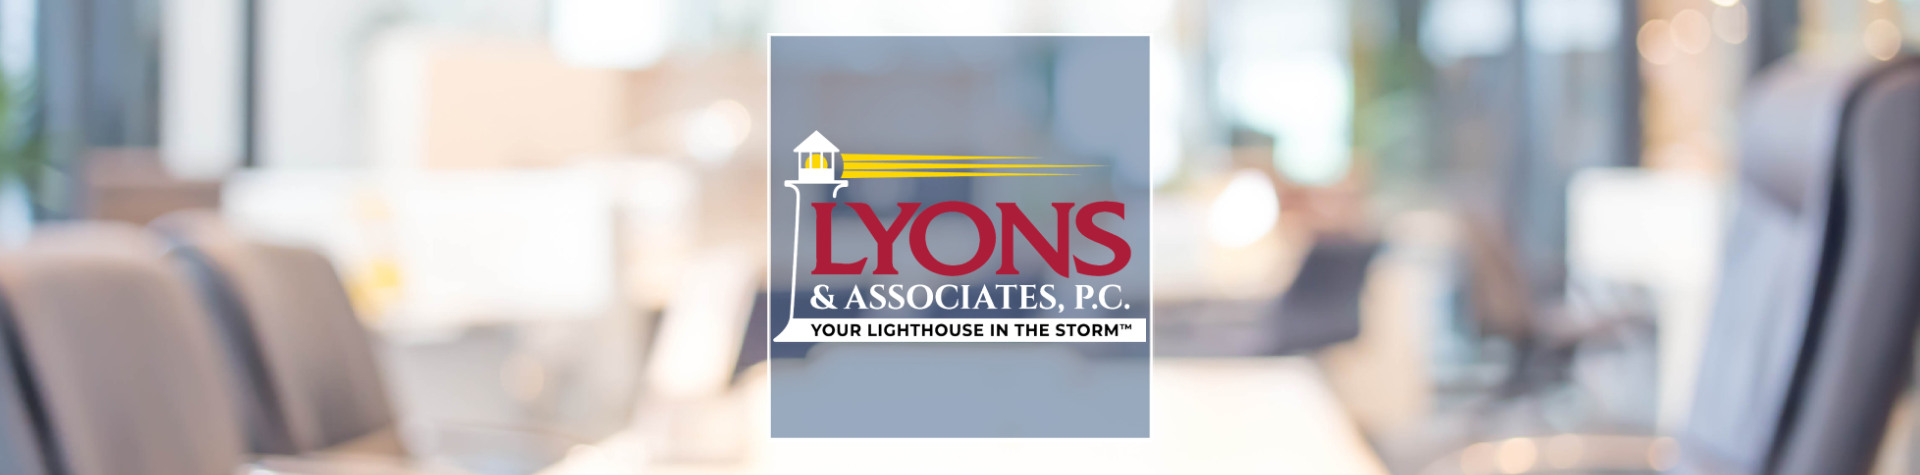 Lyons Placeholder Bio Banner